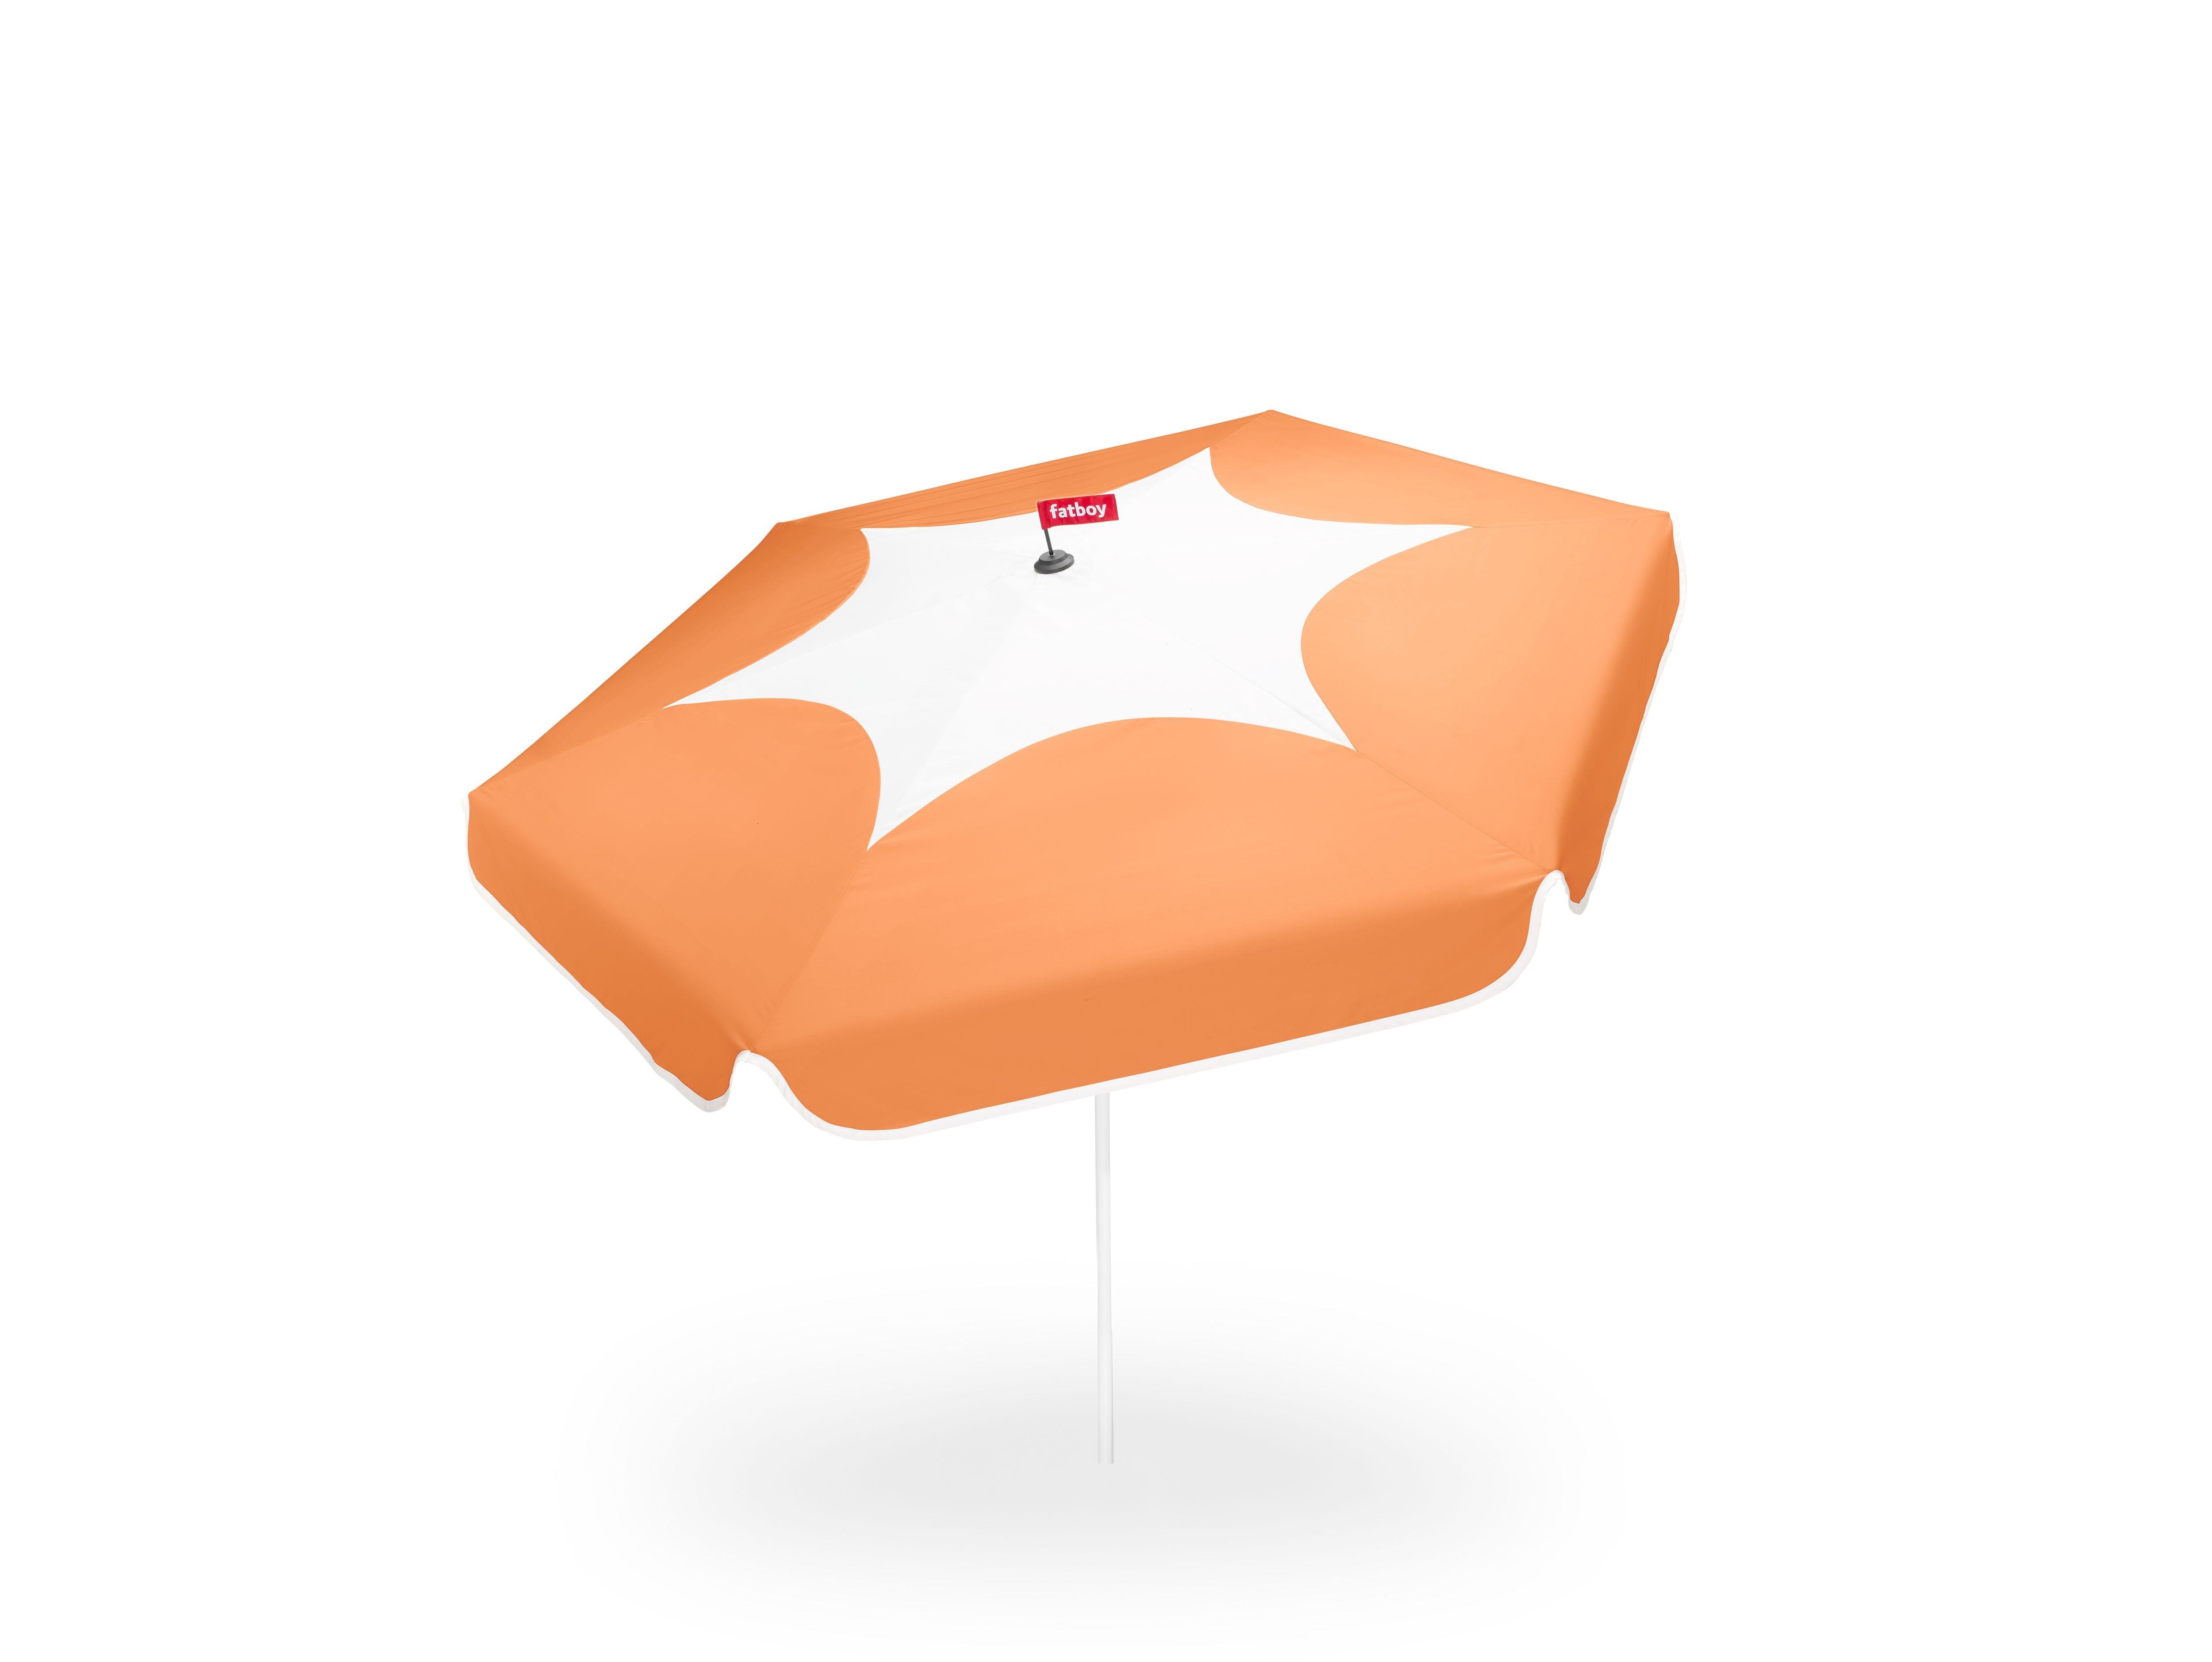 Fatboy Auringonsarainen parasoli, kurpitsa oranssi